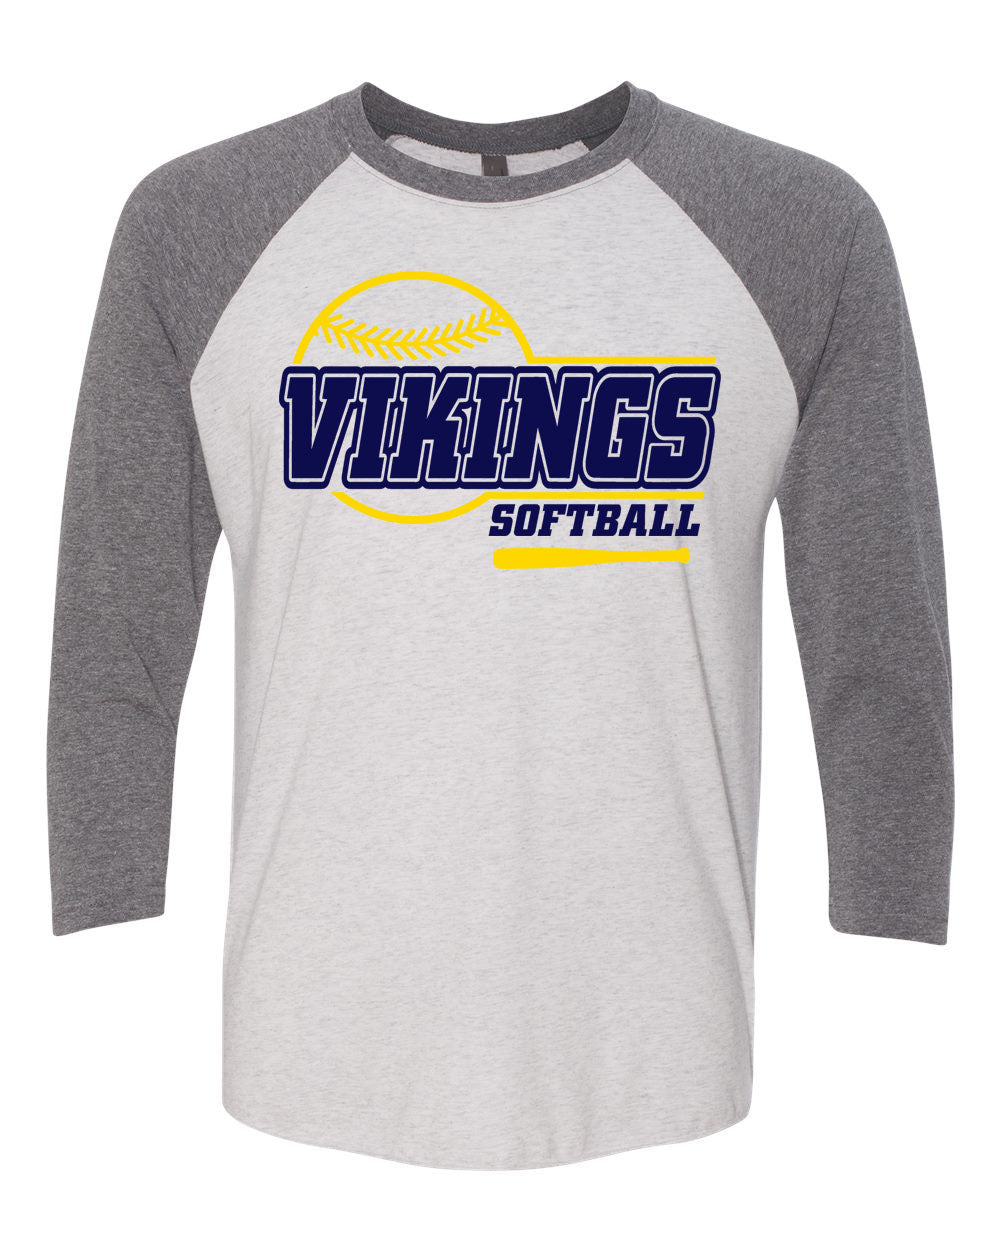 Vernon Viking Softball raglan shirt